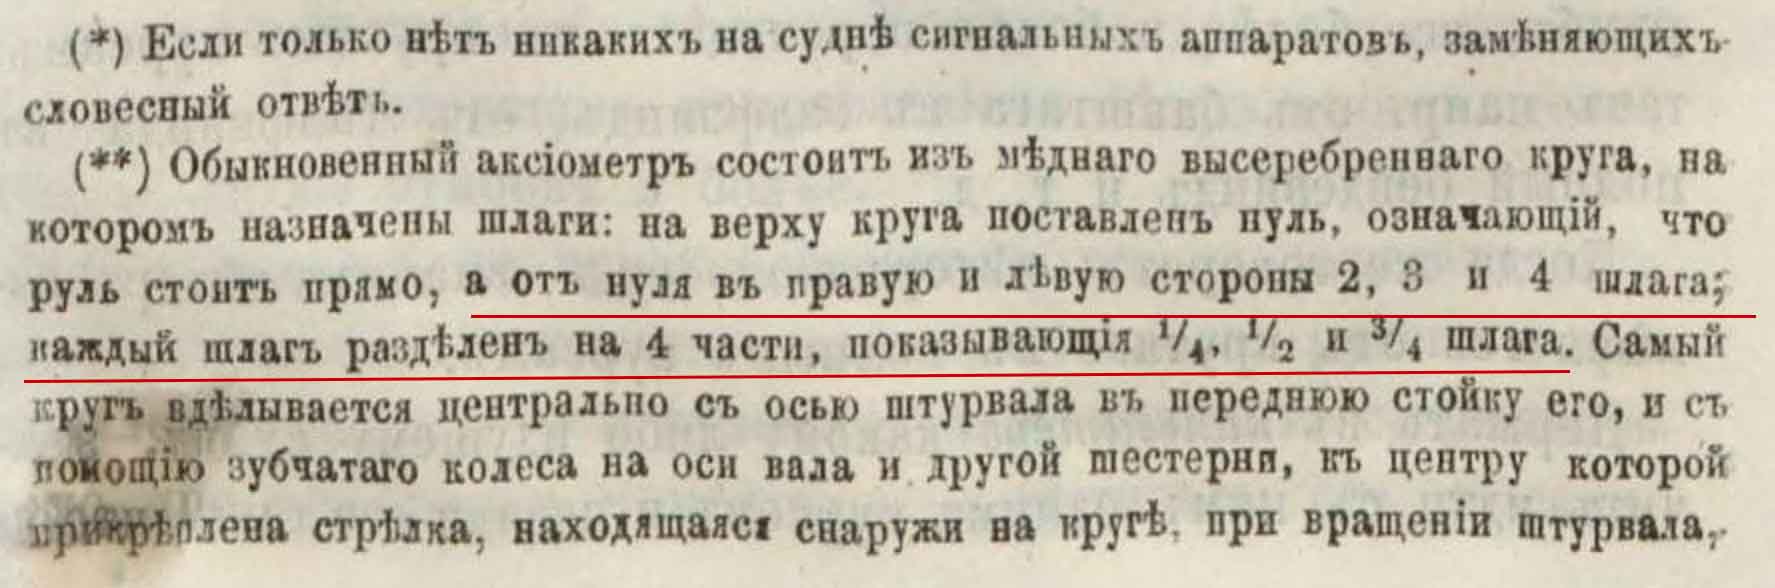 цена деления аксиометра  МП Федорович Часть 3 - 1874.jpg